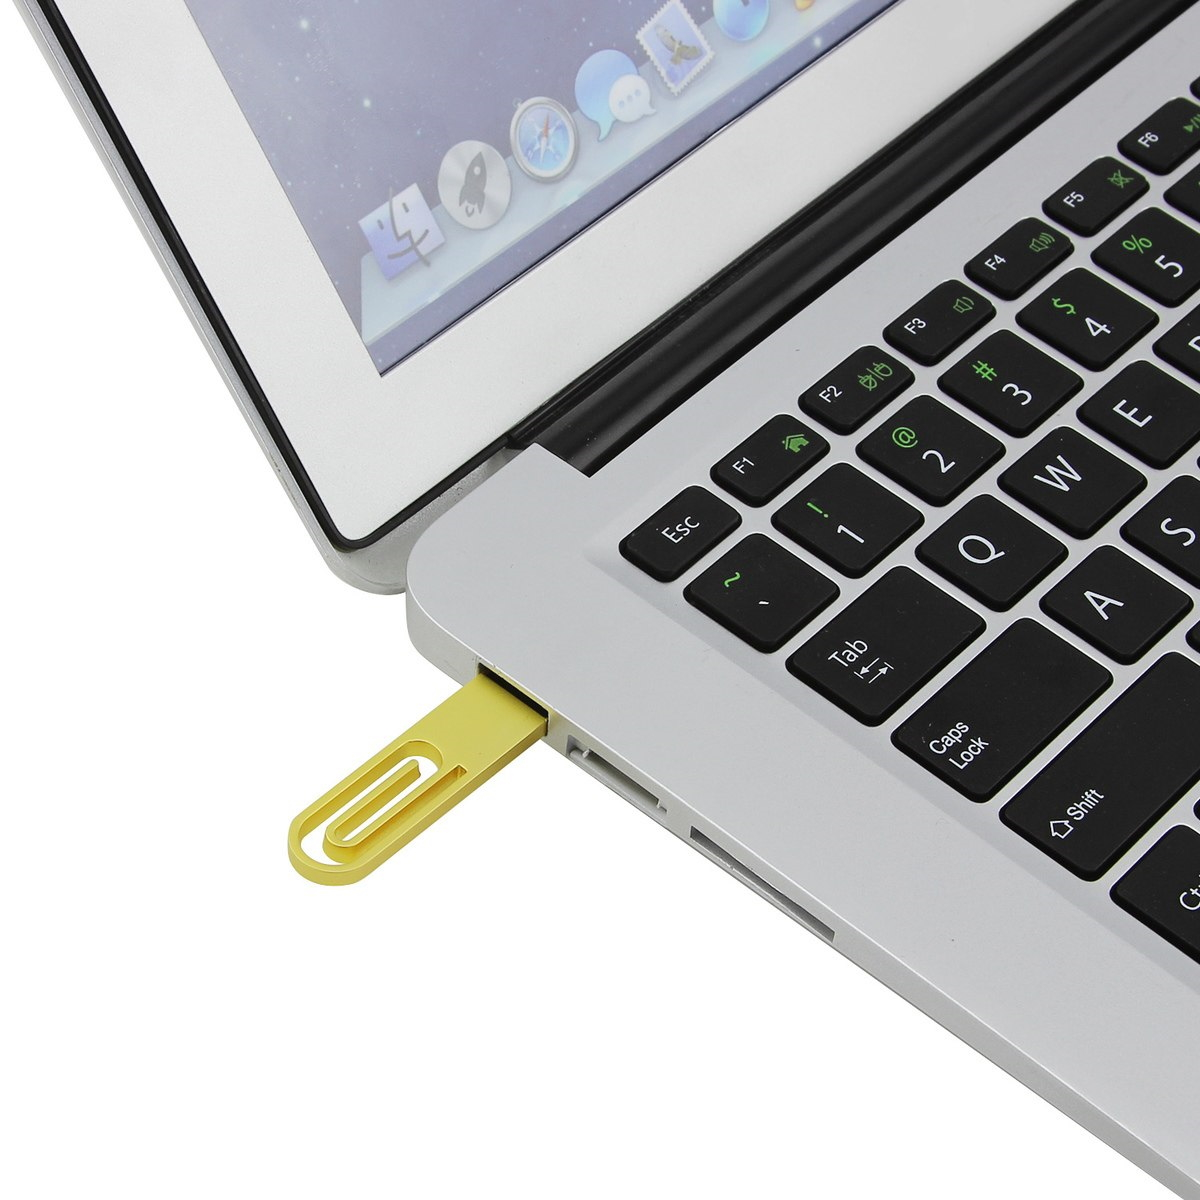 USB GERMANY ® eCLIP USB-Stick (Orange, 2 GB)